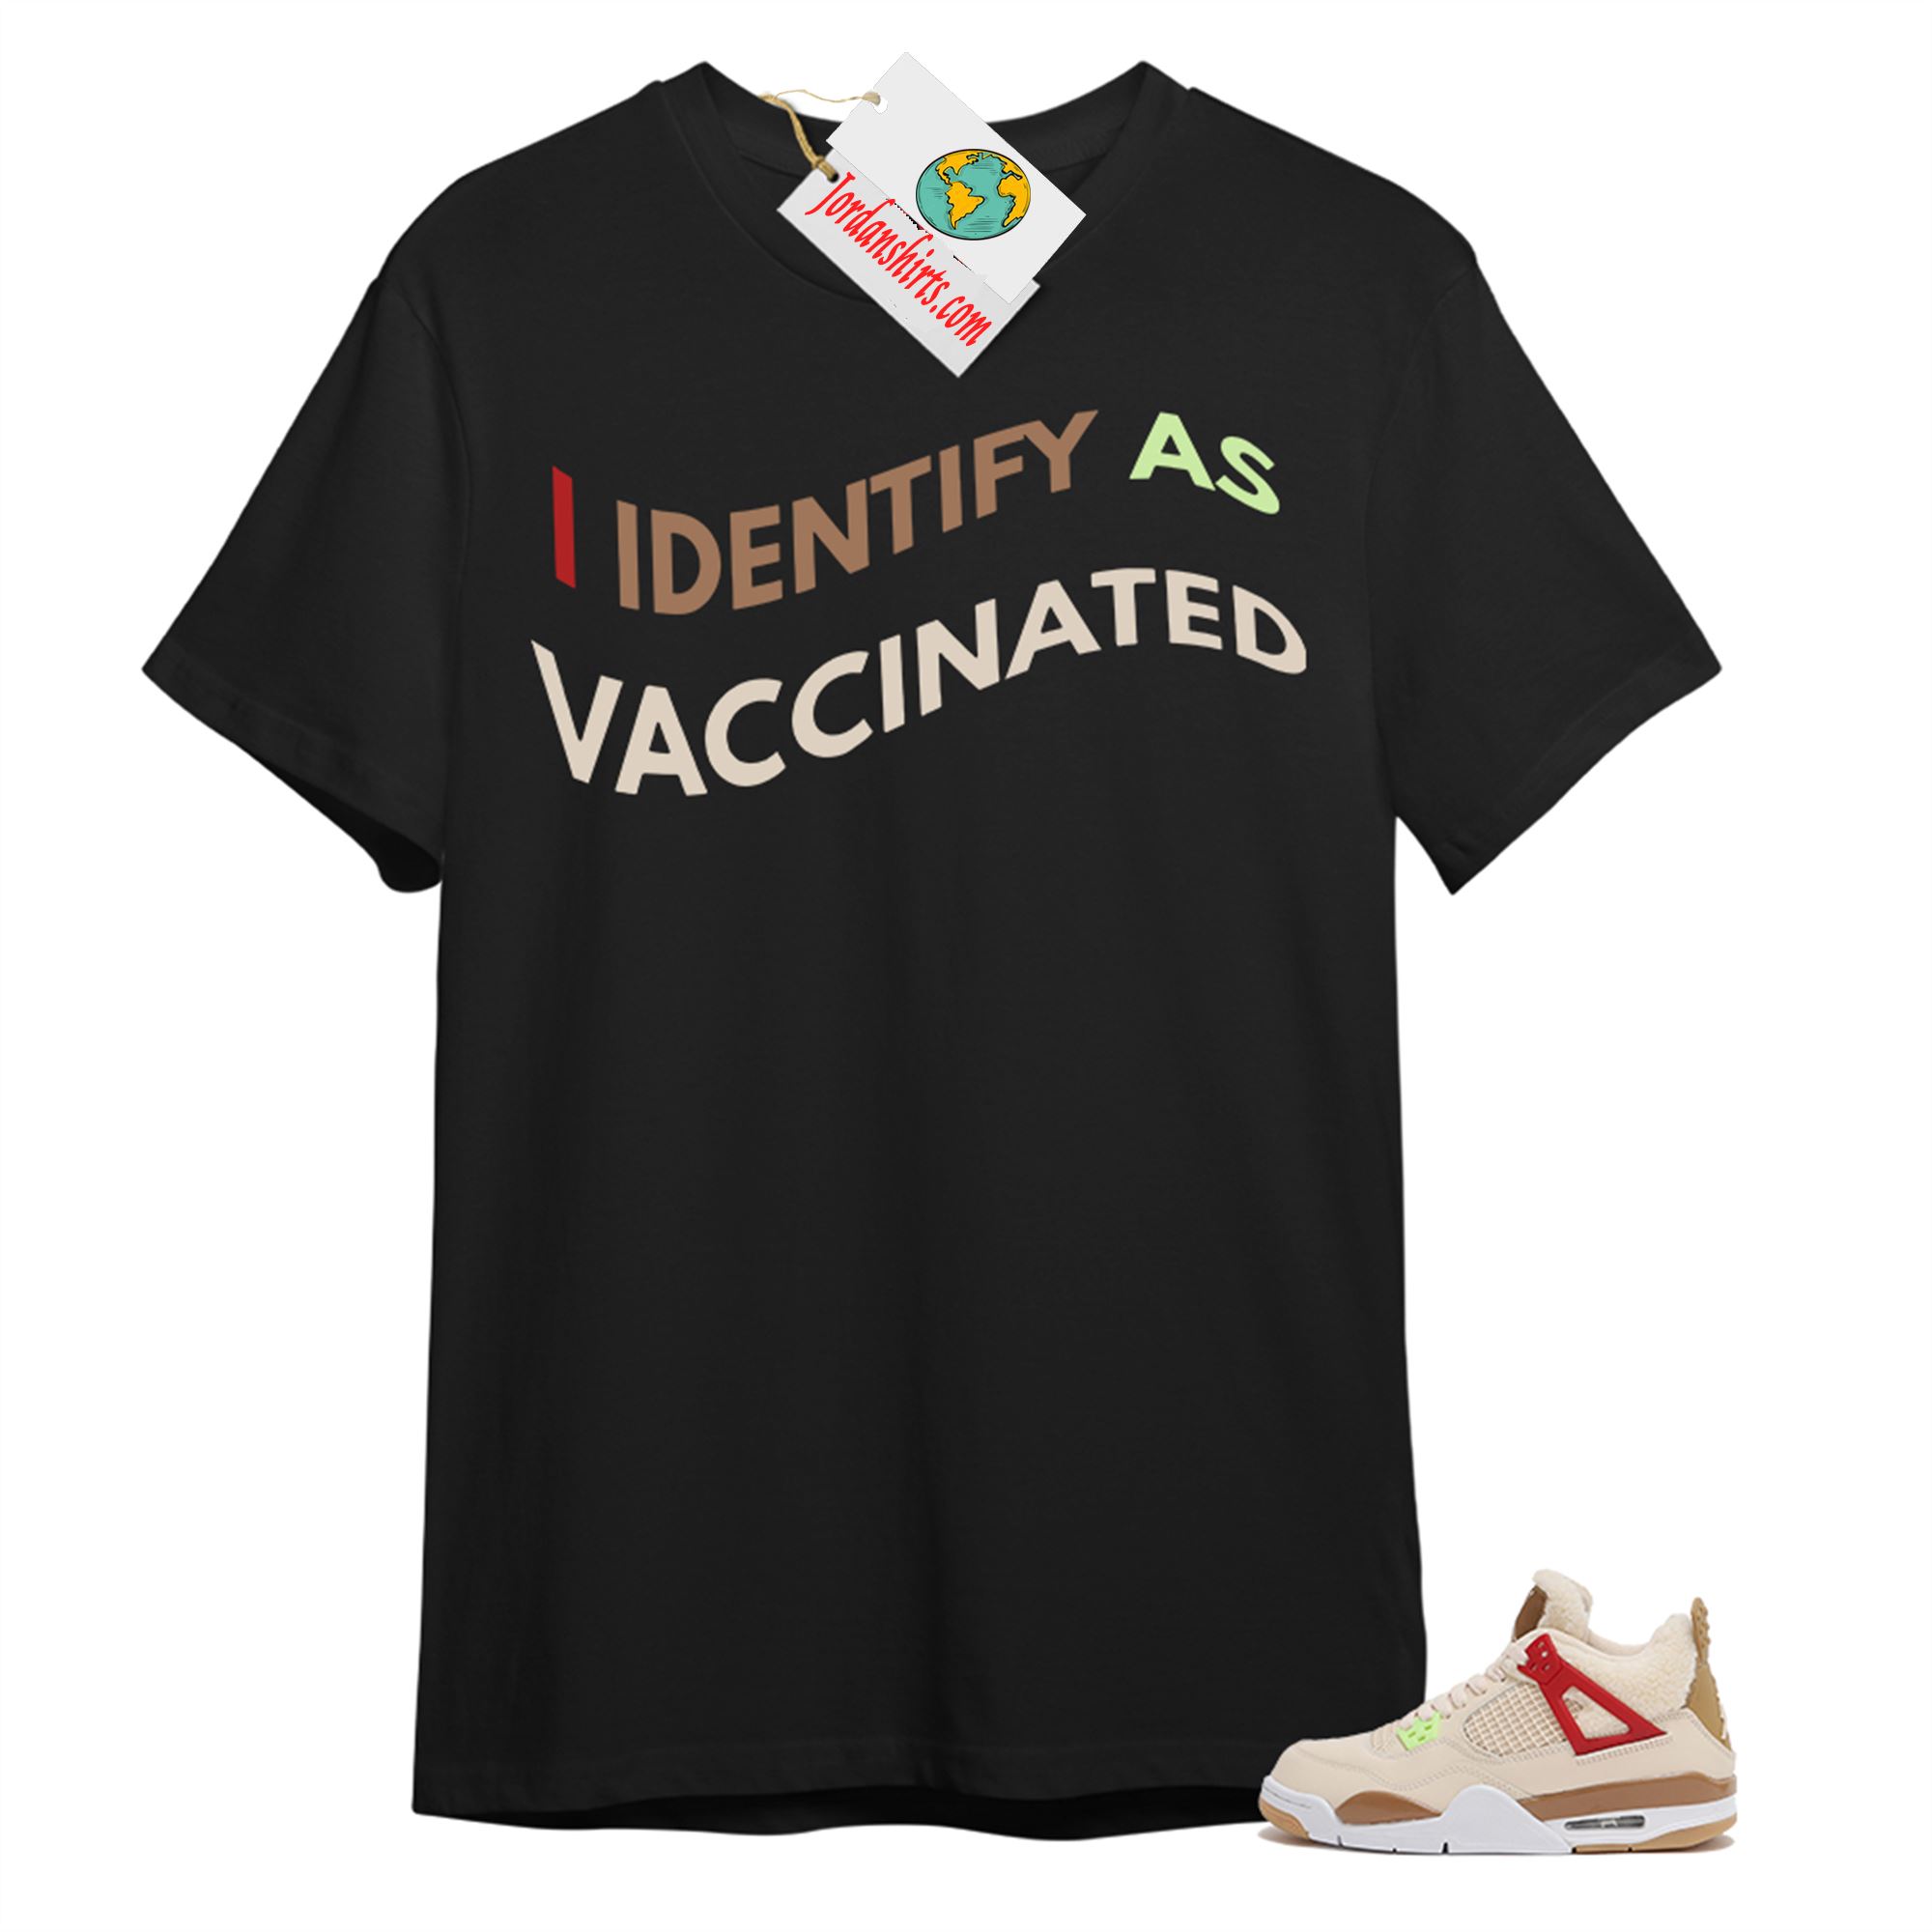 Jordan 4 Shirt, I Identify As Vaccinated Black T-shirt Air Jordan 4 Wild Things 4s Full Size Up To 5xl